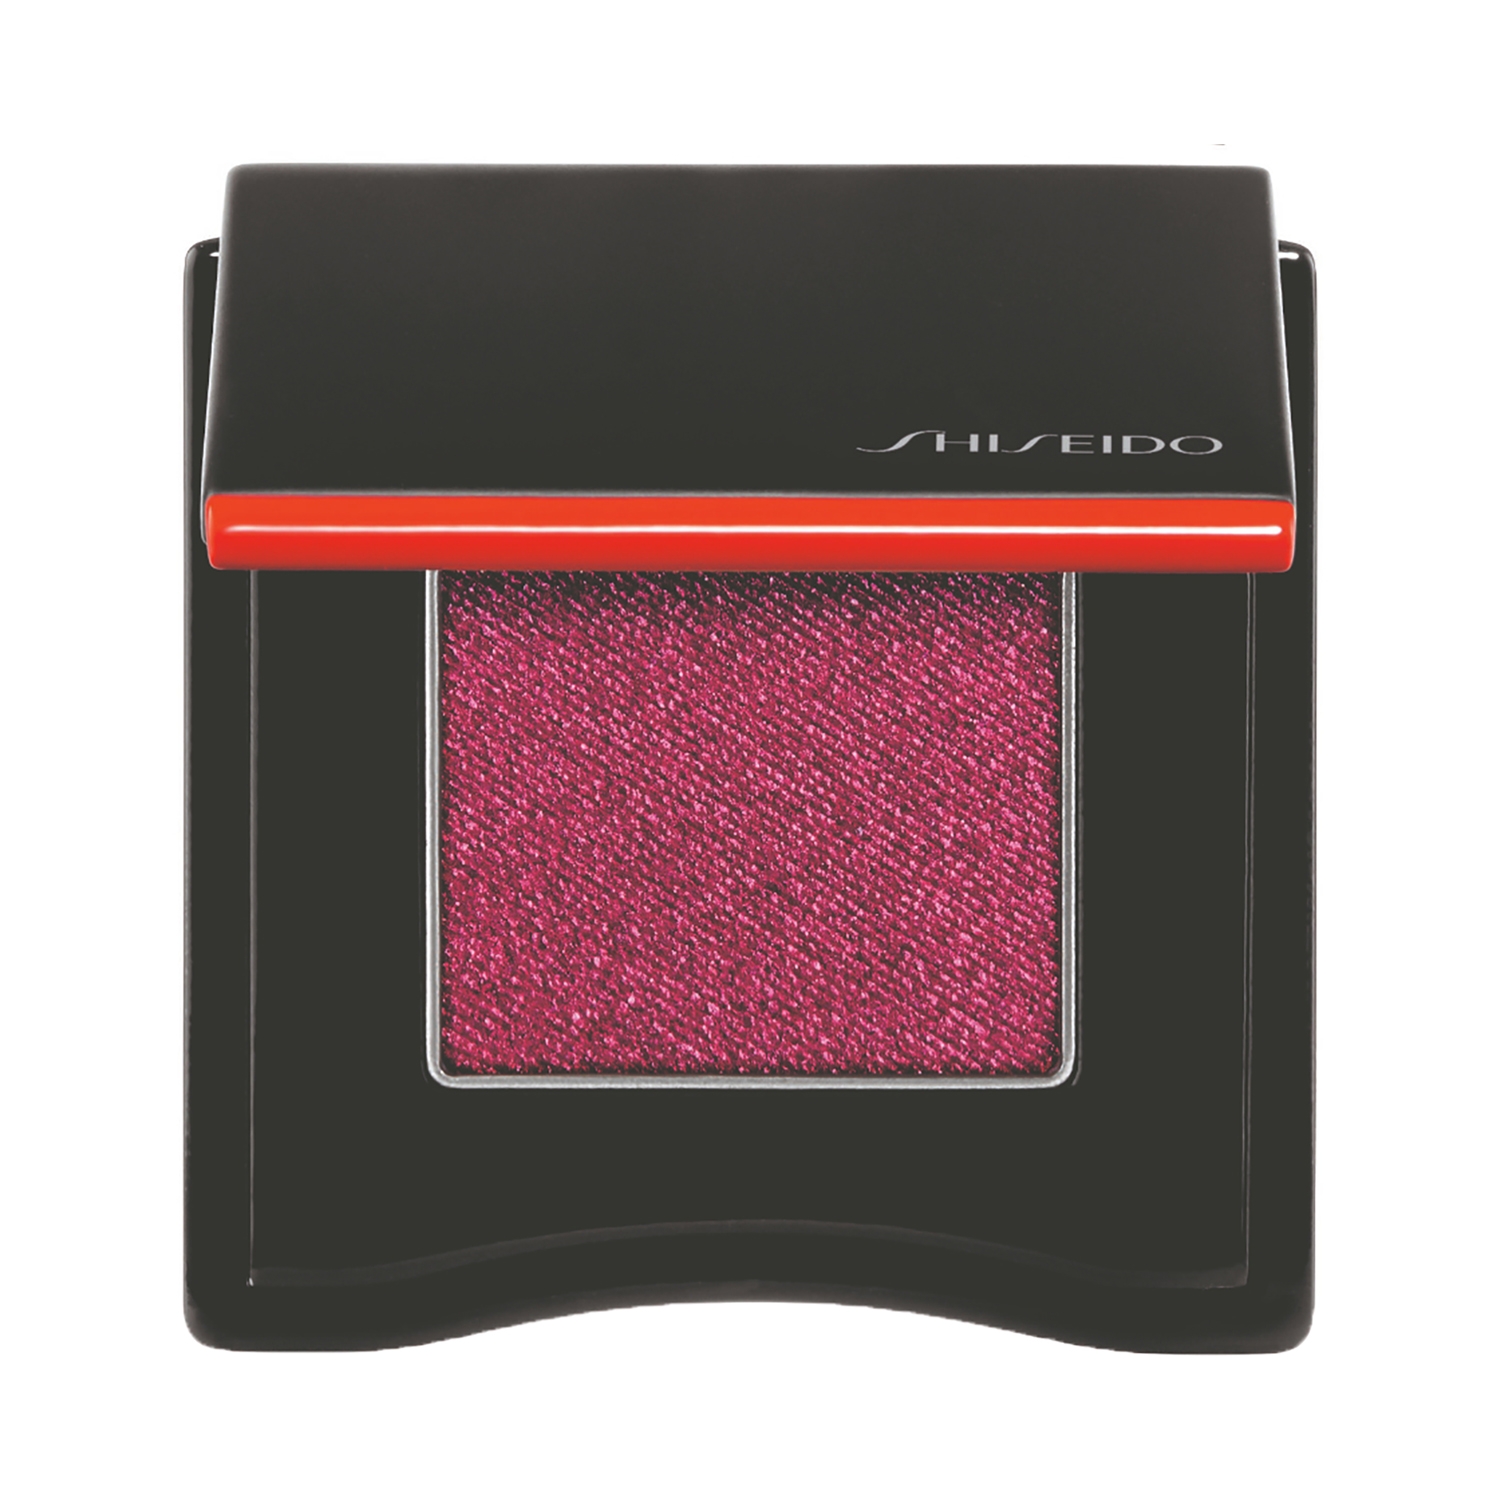 Shiseido | Shiseido Pop Powdergel Eye Shadow - 18 Doki Red (2.2g)